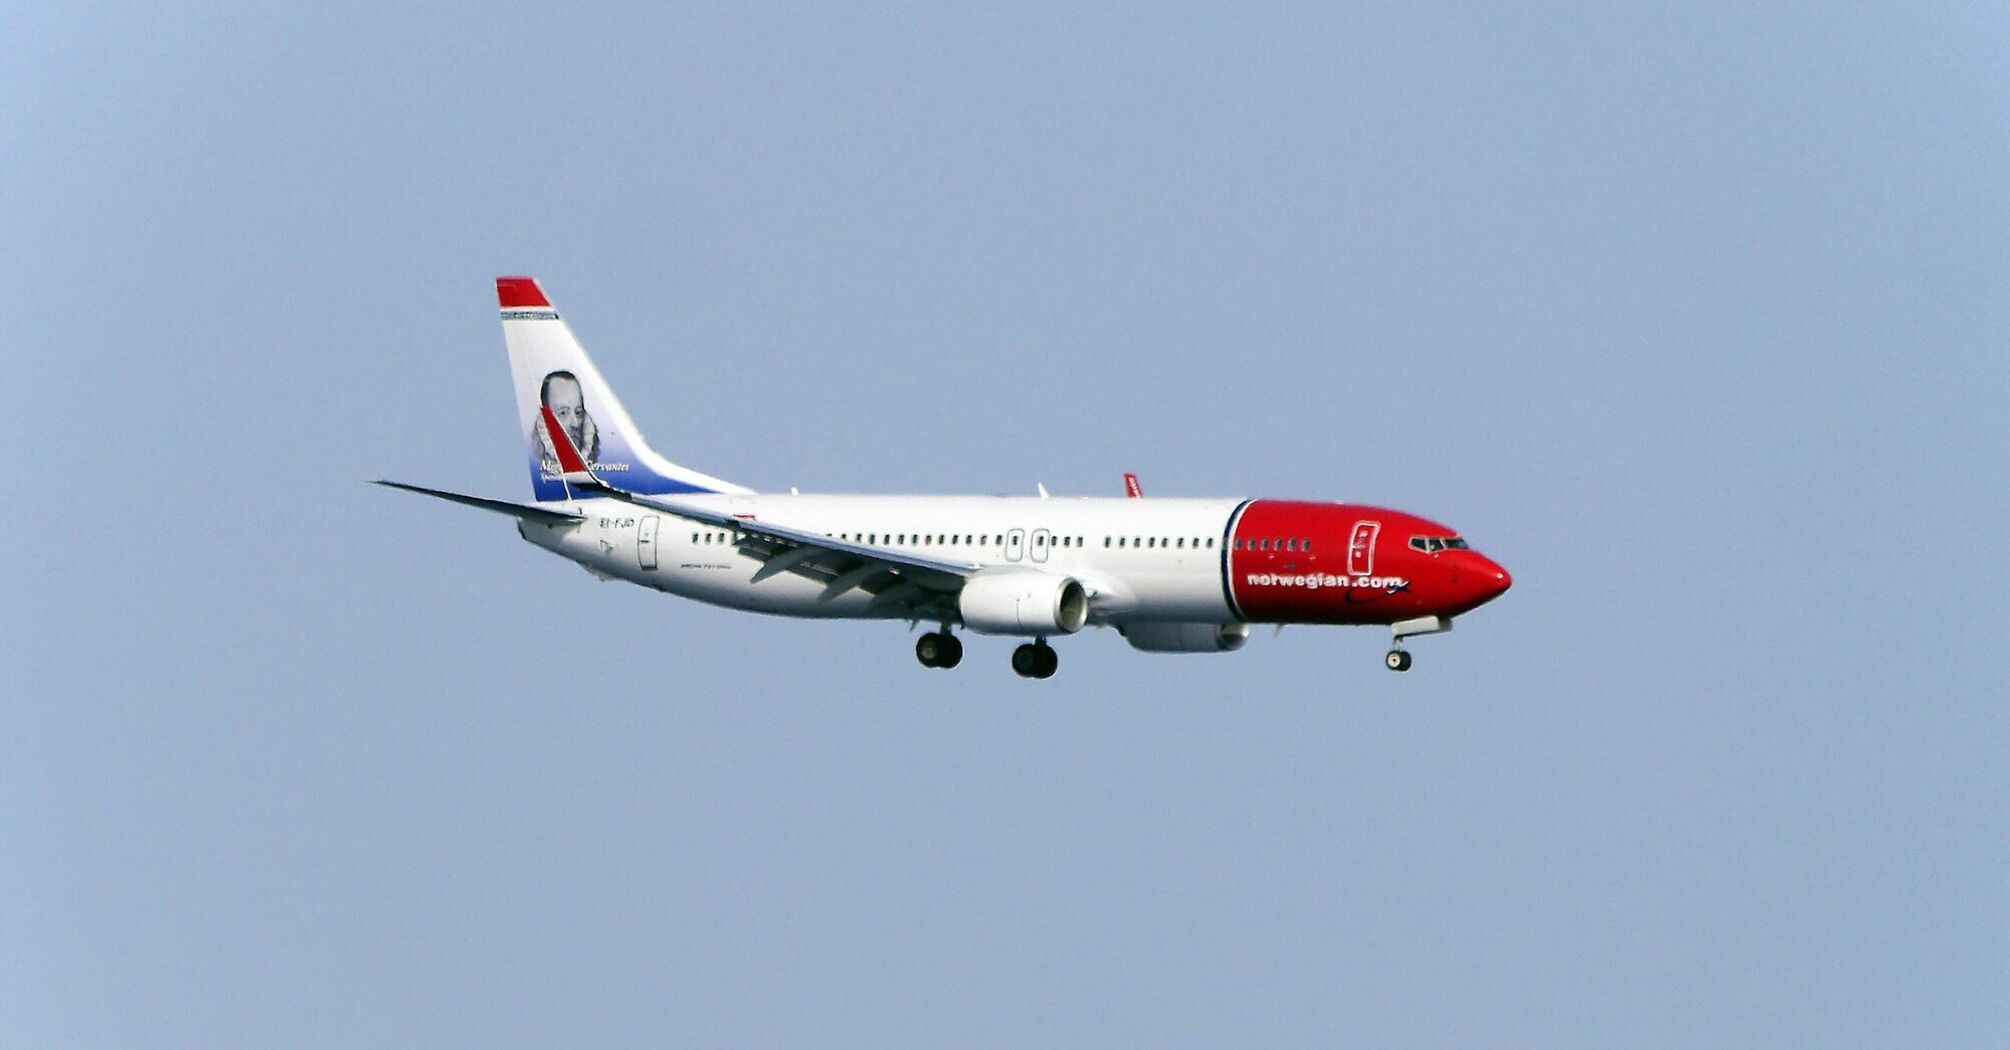 Norwegian Air Shuttle airplane in flight